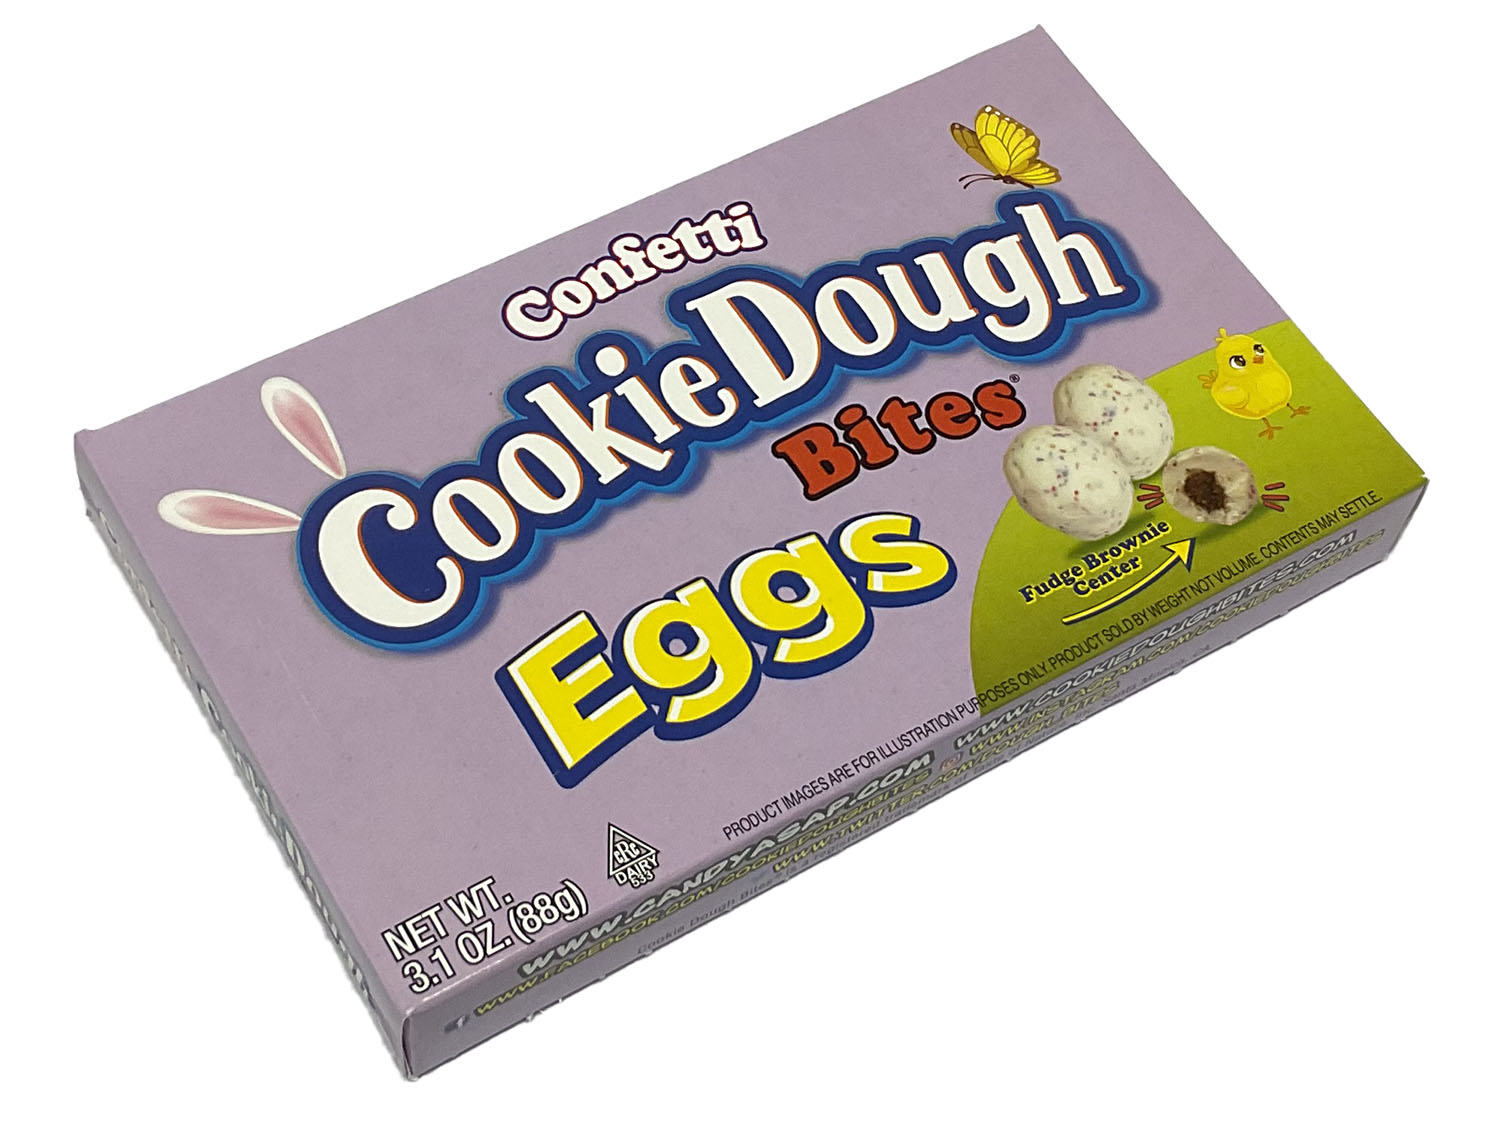 Cookie Dough Bites Candies